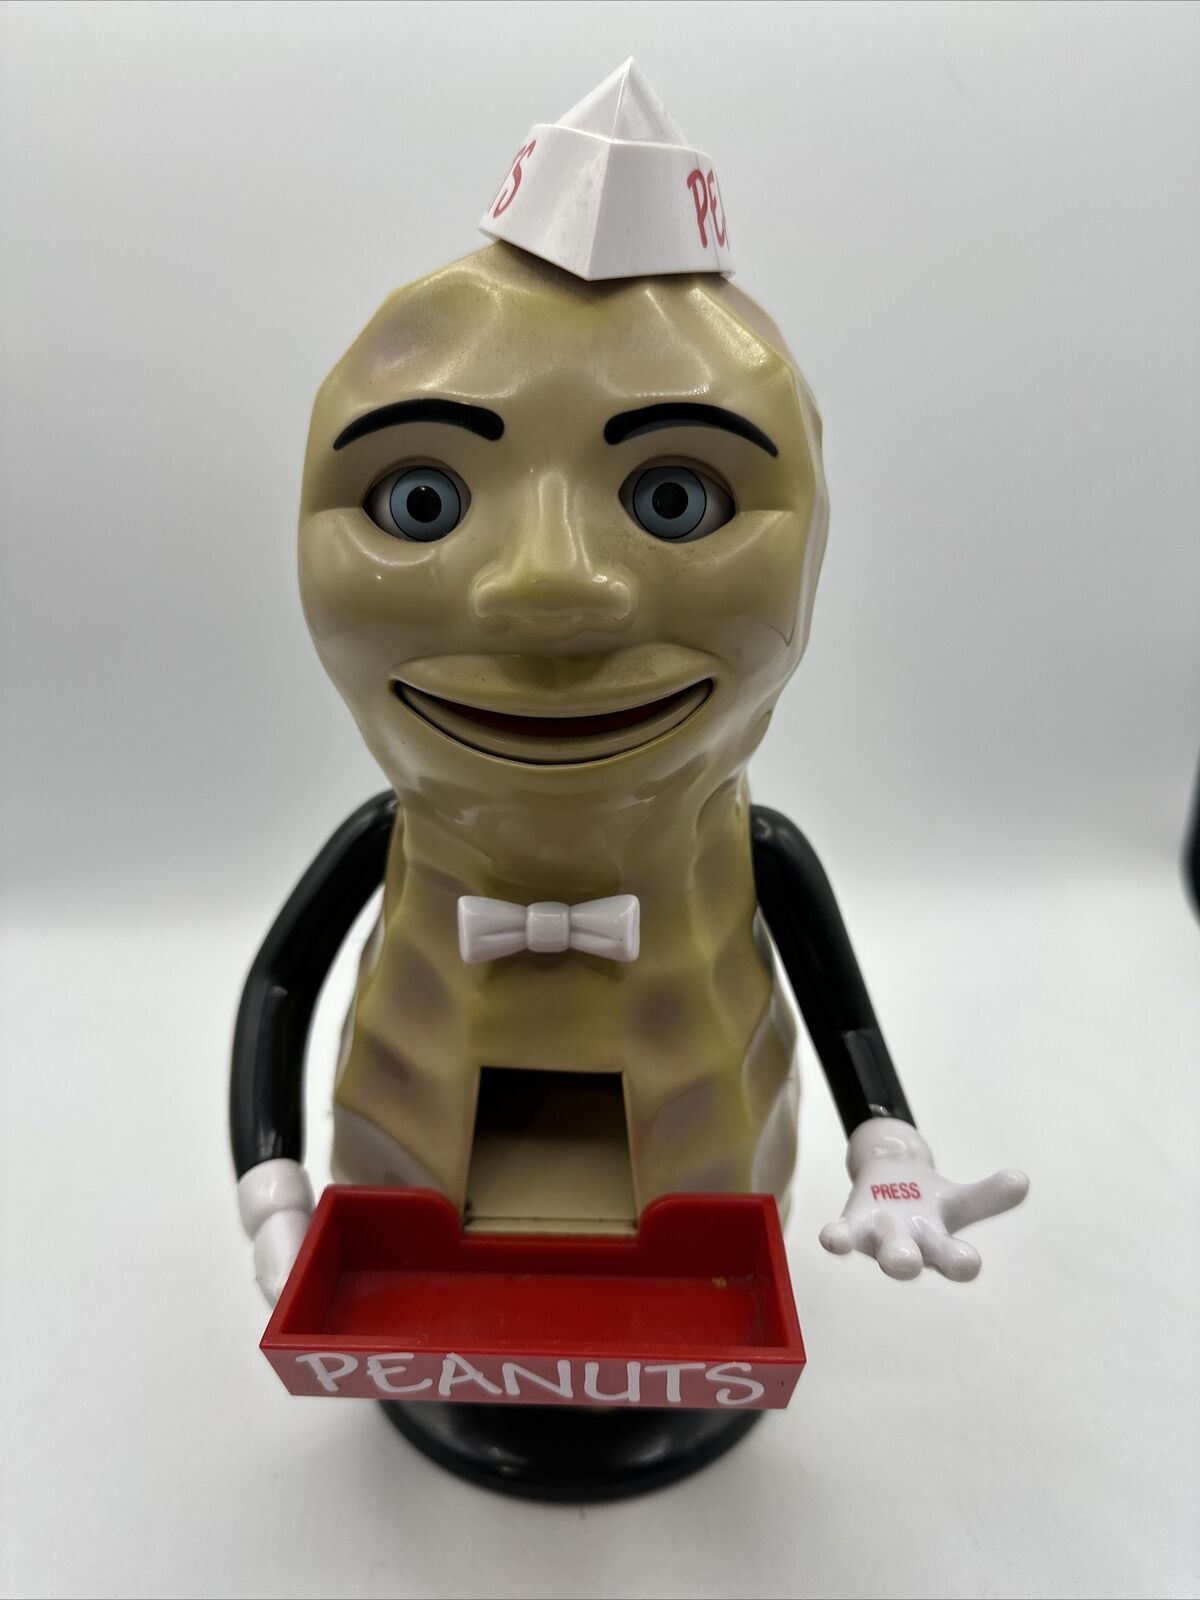 2001 Original “Peanut Dispenser” Talks, Eyes & Mouth Move, Dispenses Peanuts